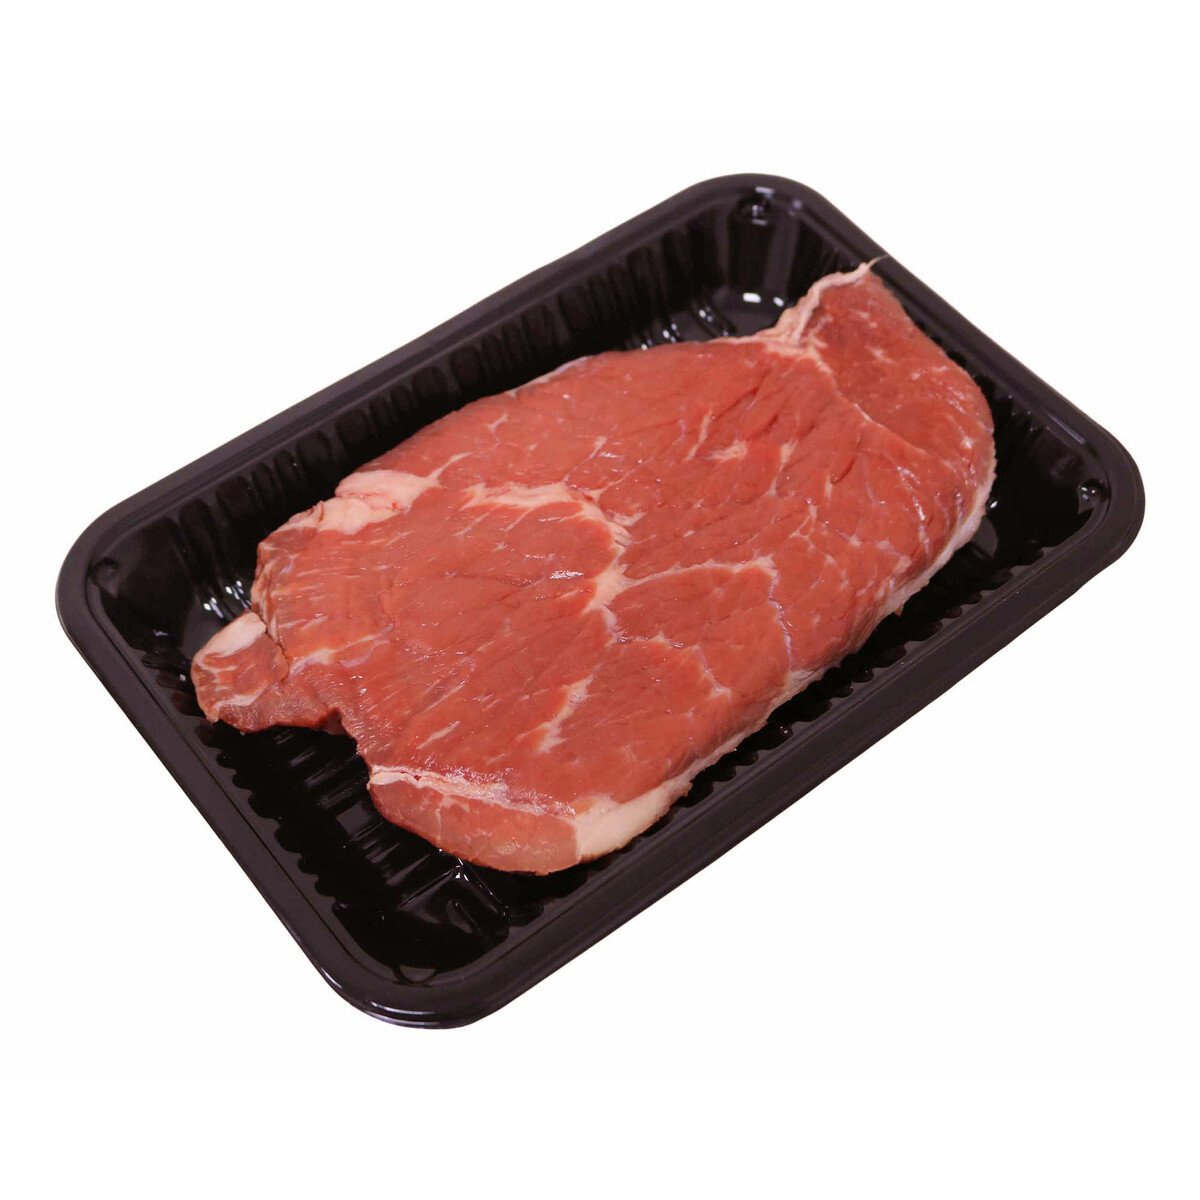 Prime Beef Silverside Steak 500g Approx Weight